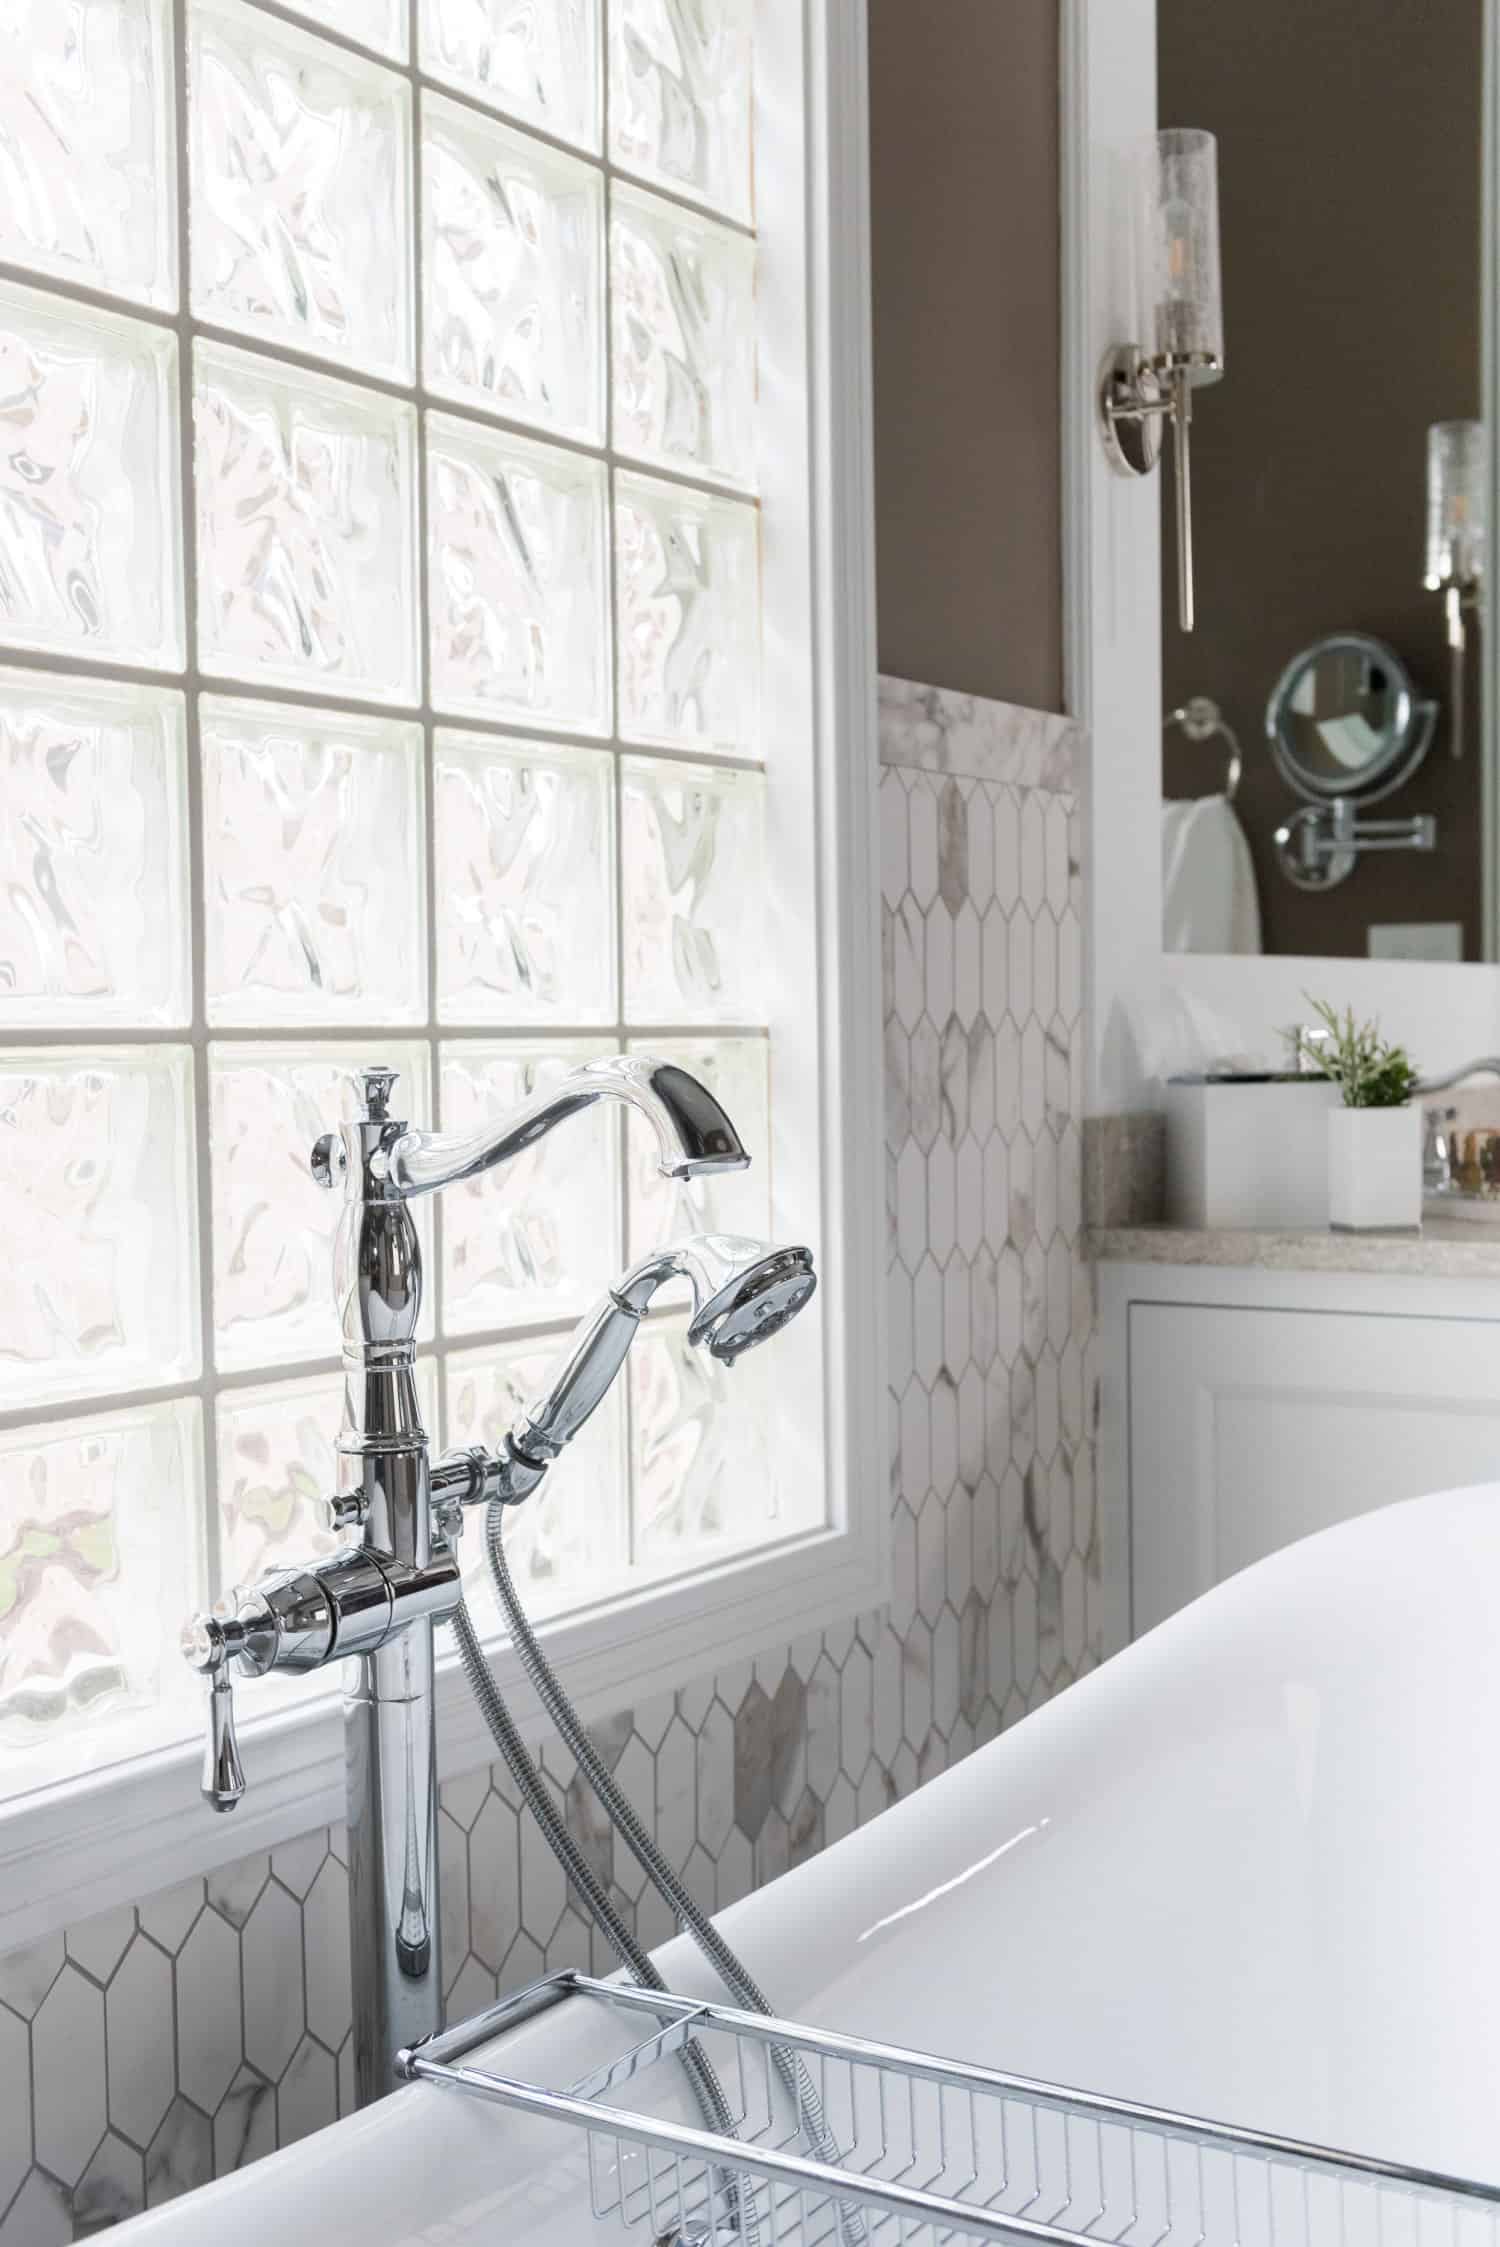 Nicholas Design Build | An oasis-like white bathroom with a bathtub and a window.